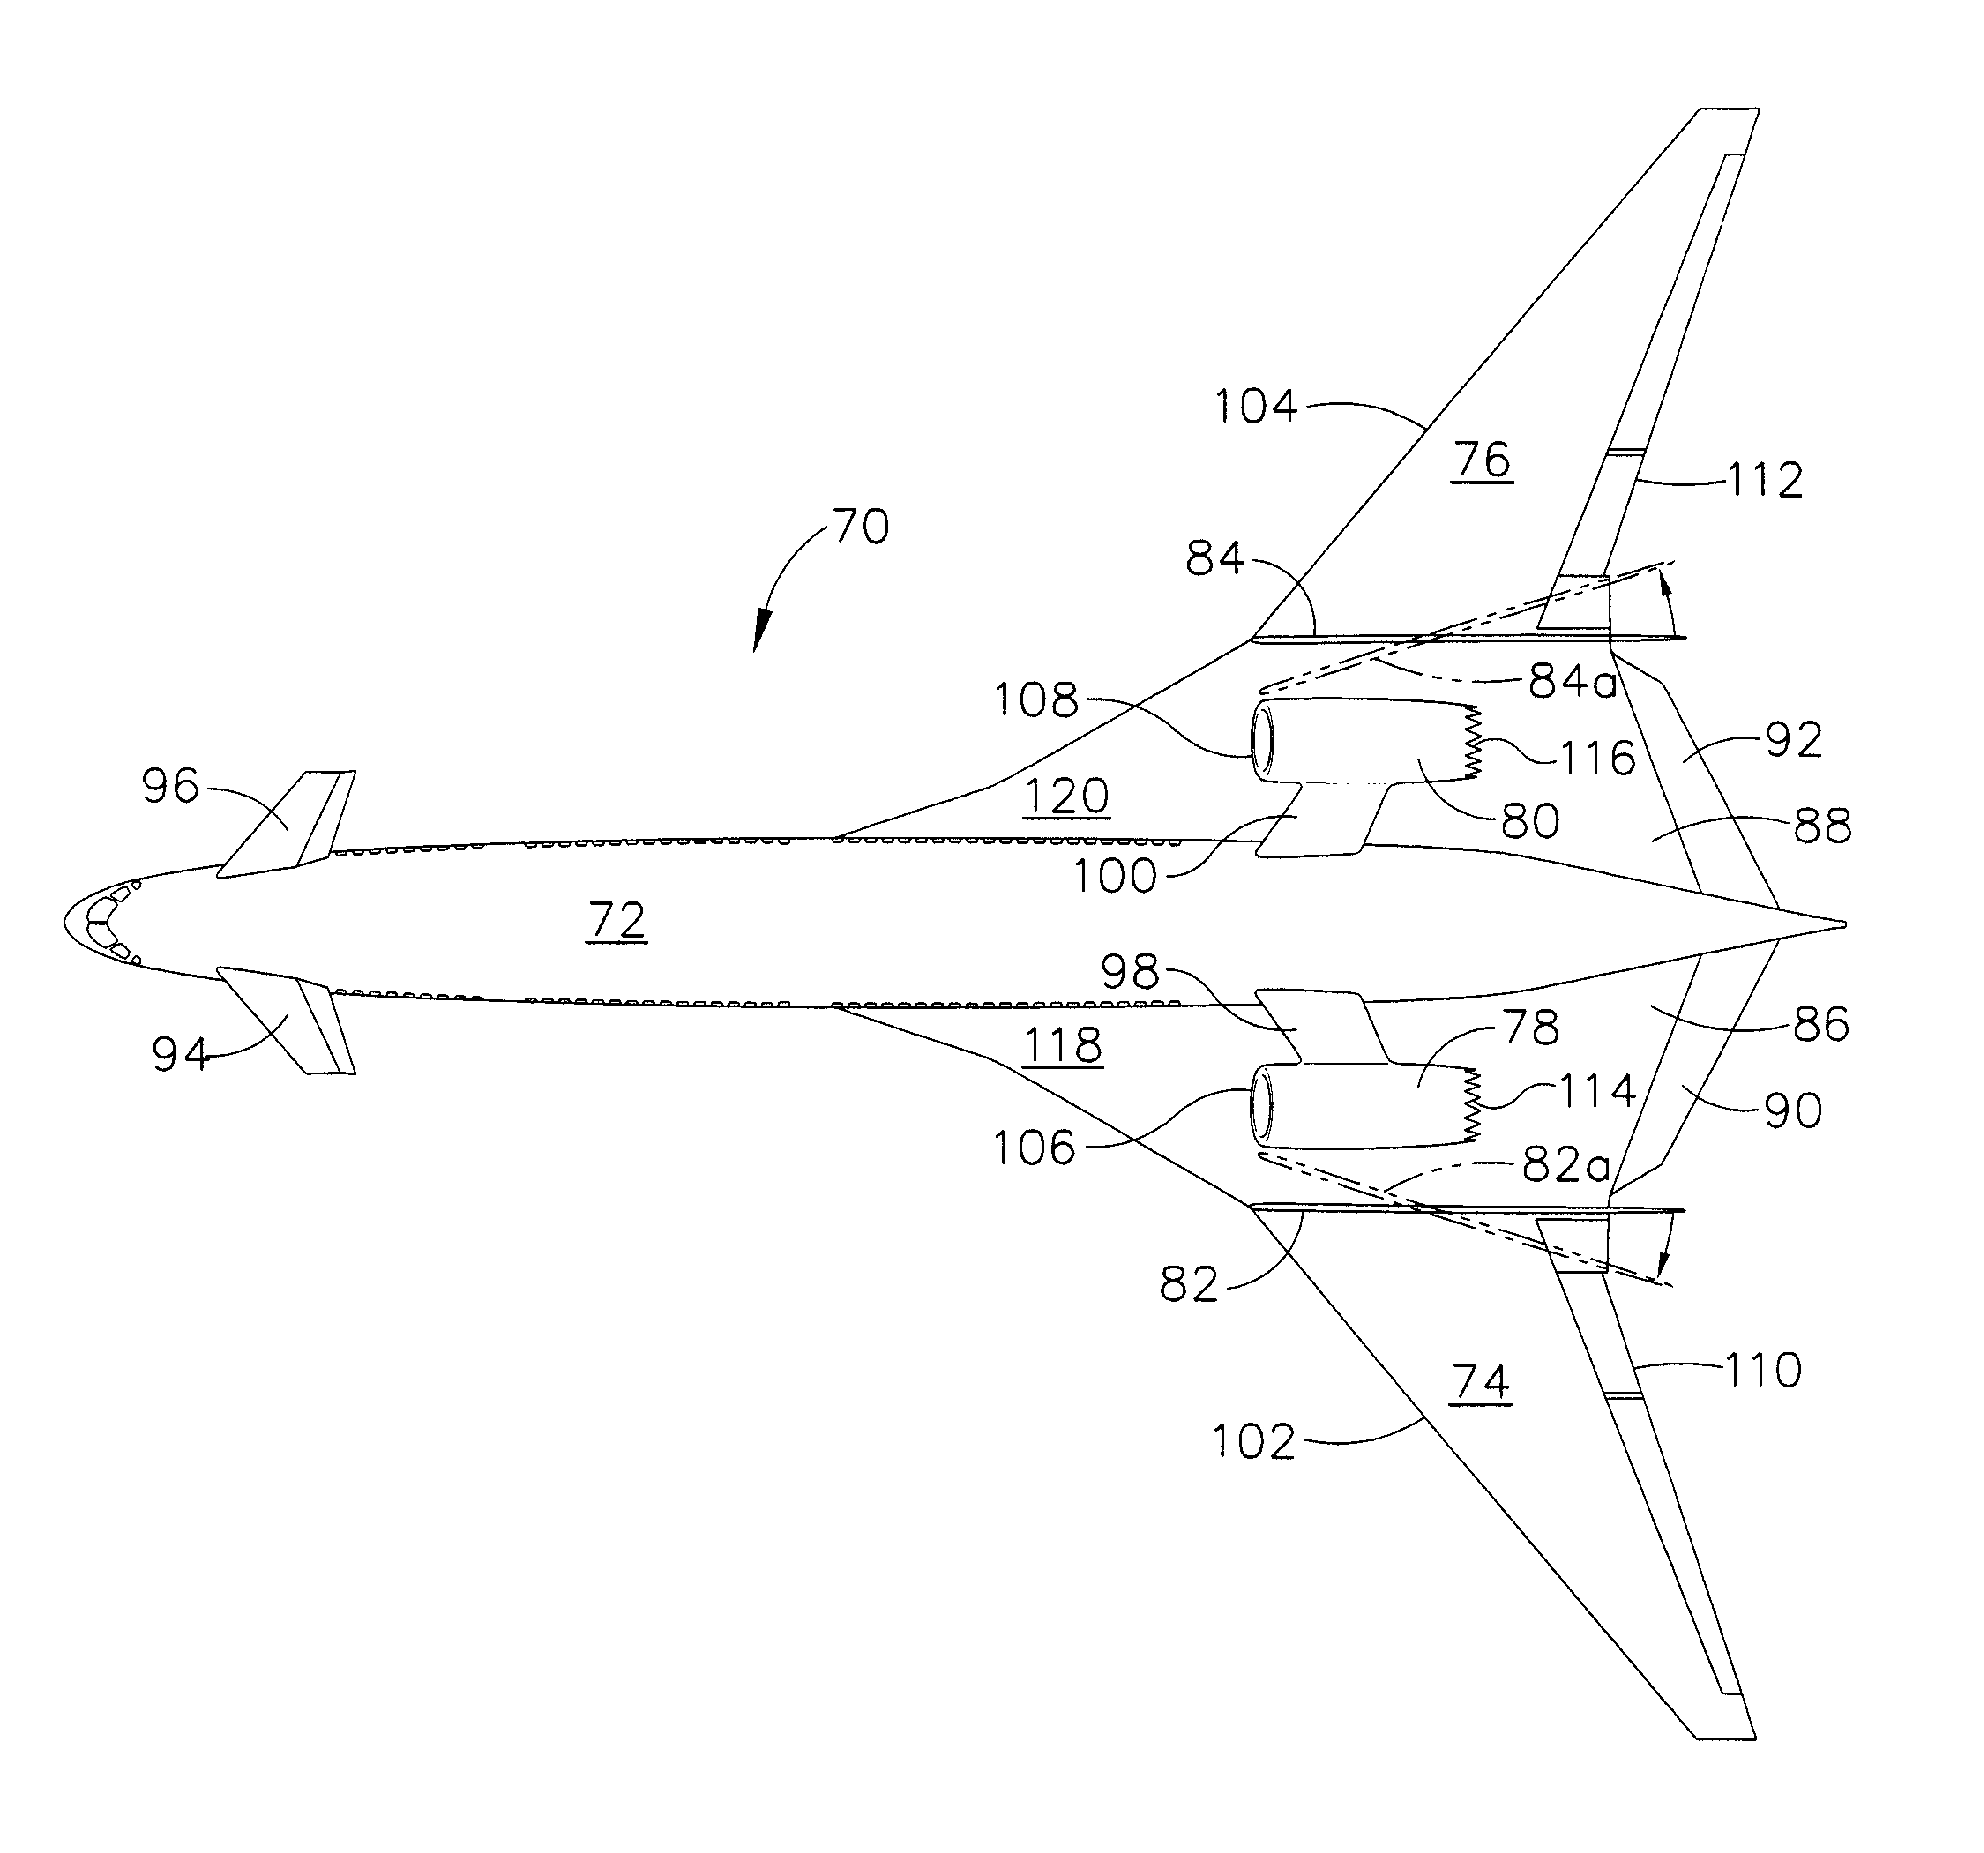 Aircraft configuration